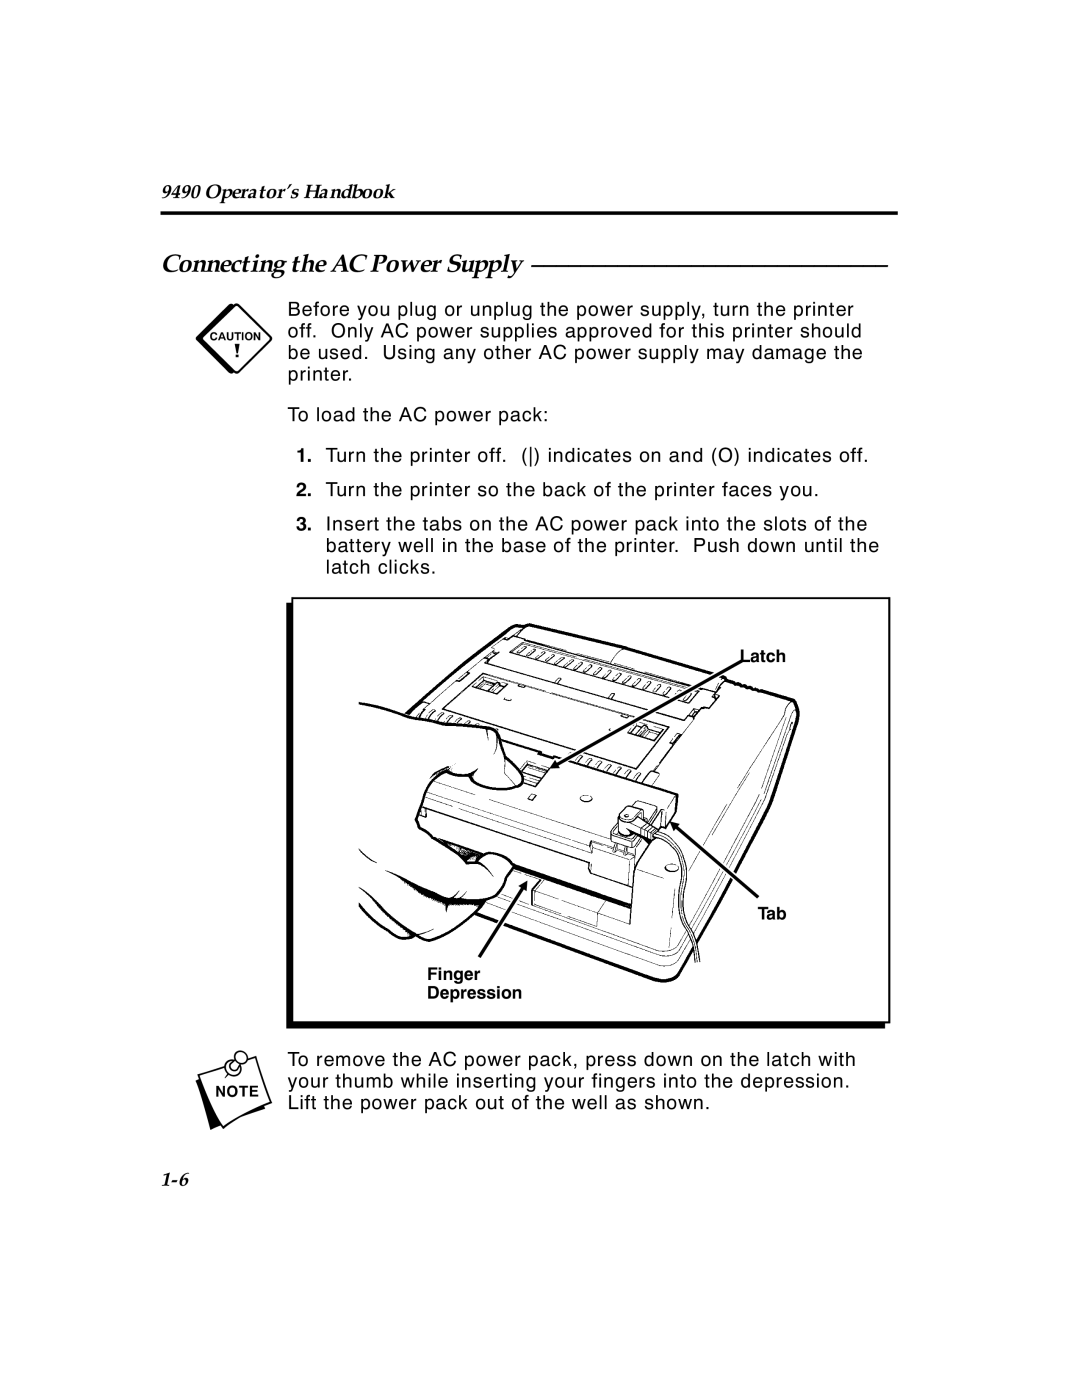 Paxar 4 manual Connecting the AC Power Supply, Operator’s Handbook 